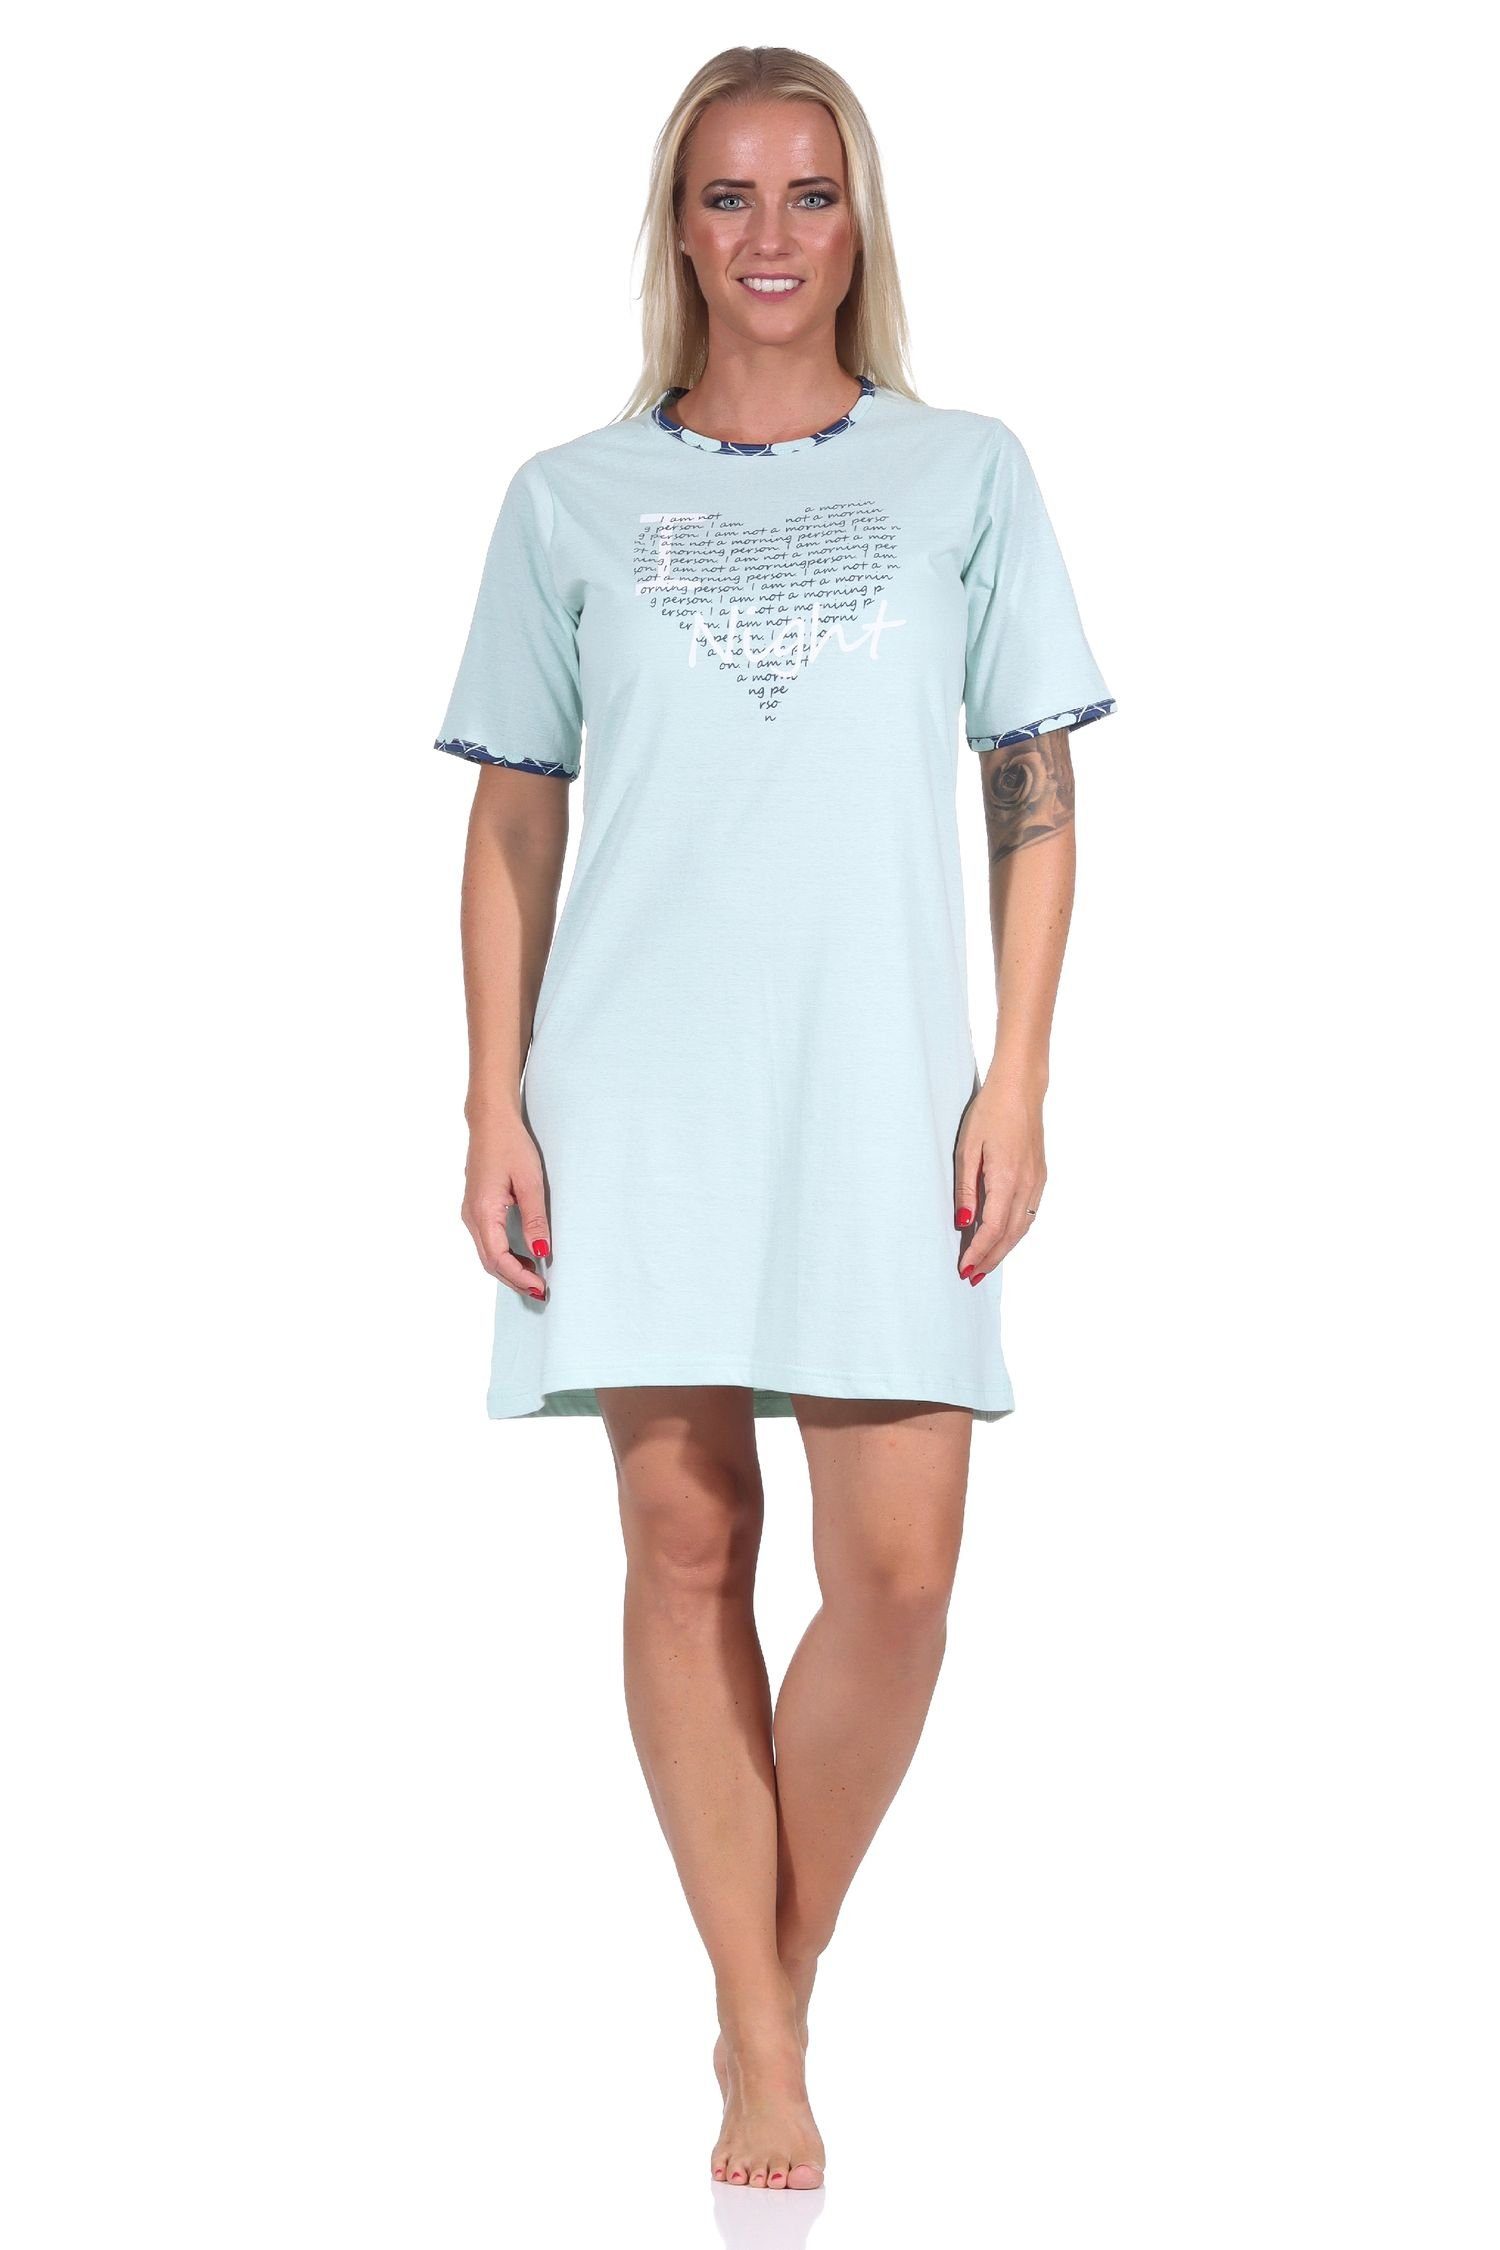 RELAX by Normann Nachthemd Cooles Damen kurzarm Nachthemd Bigshirt mit Herz  Motiv - 122 10 603